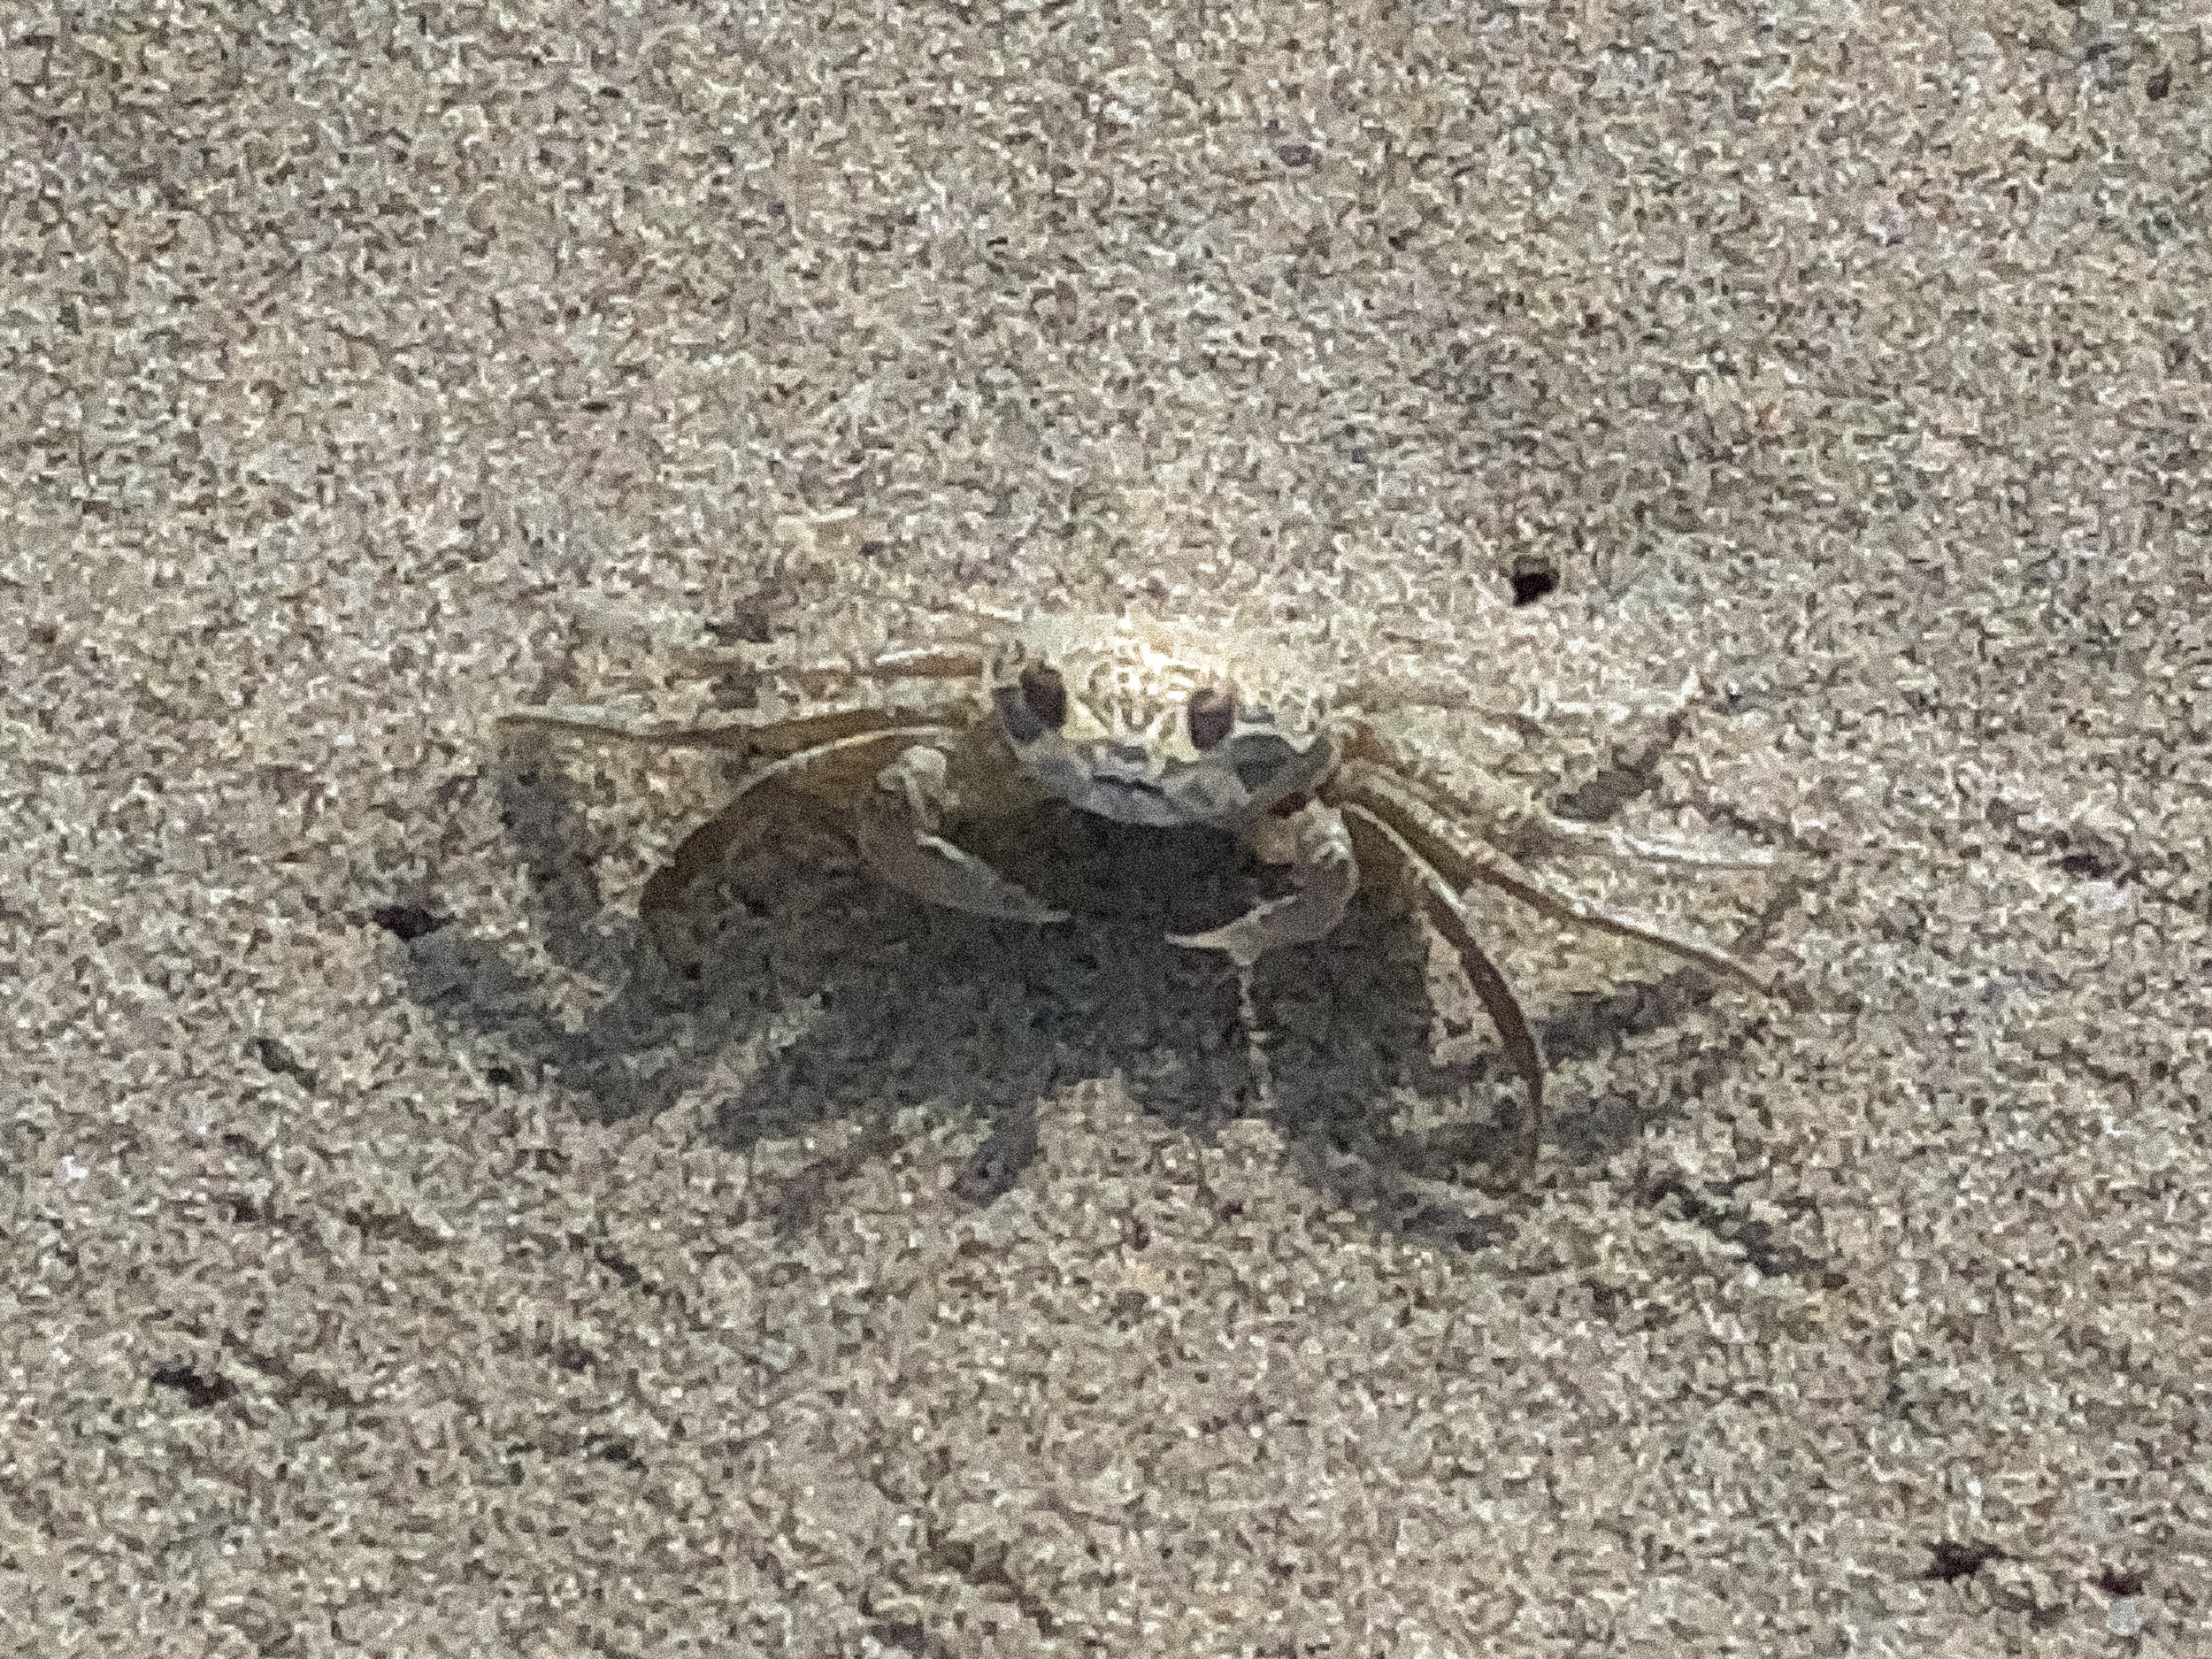 Atlantic Ghost Crab (juvenile)